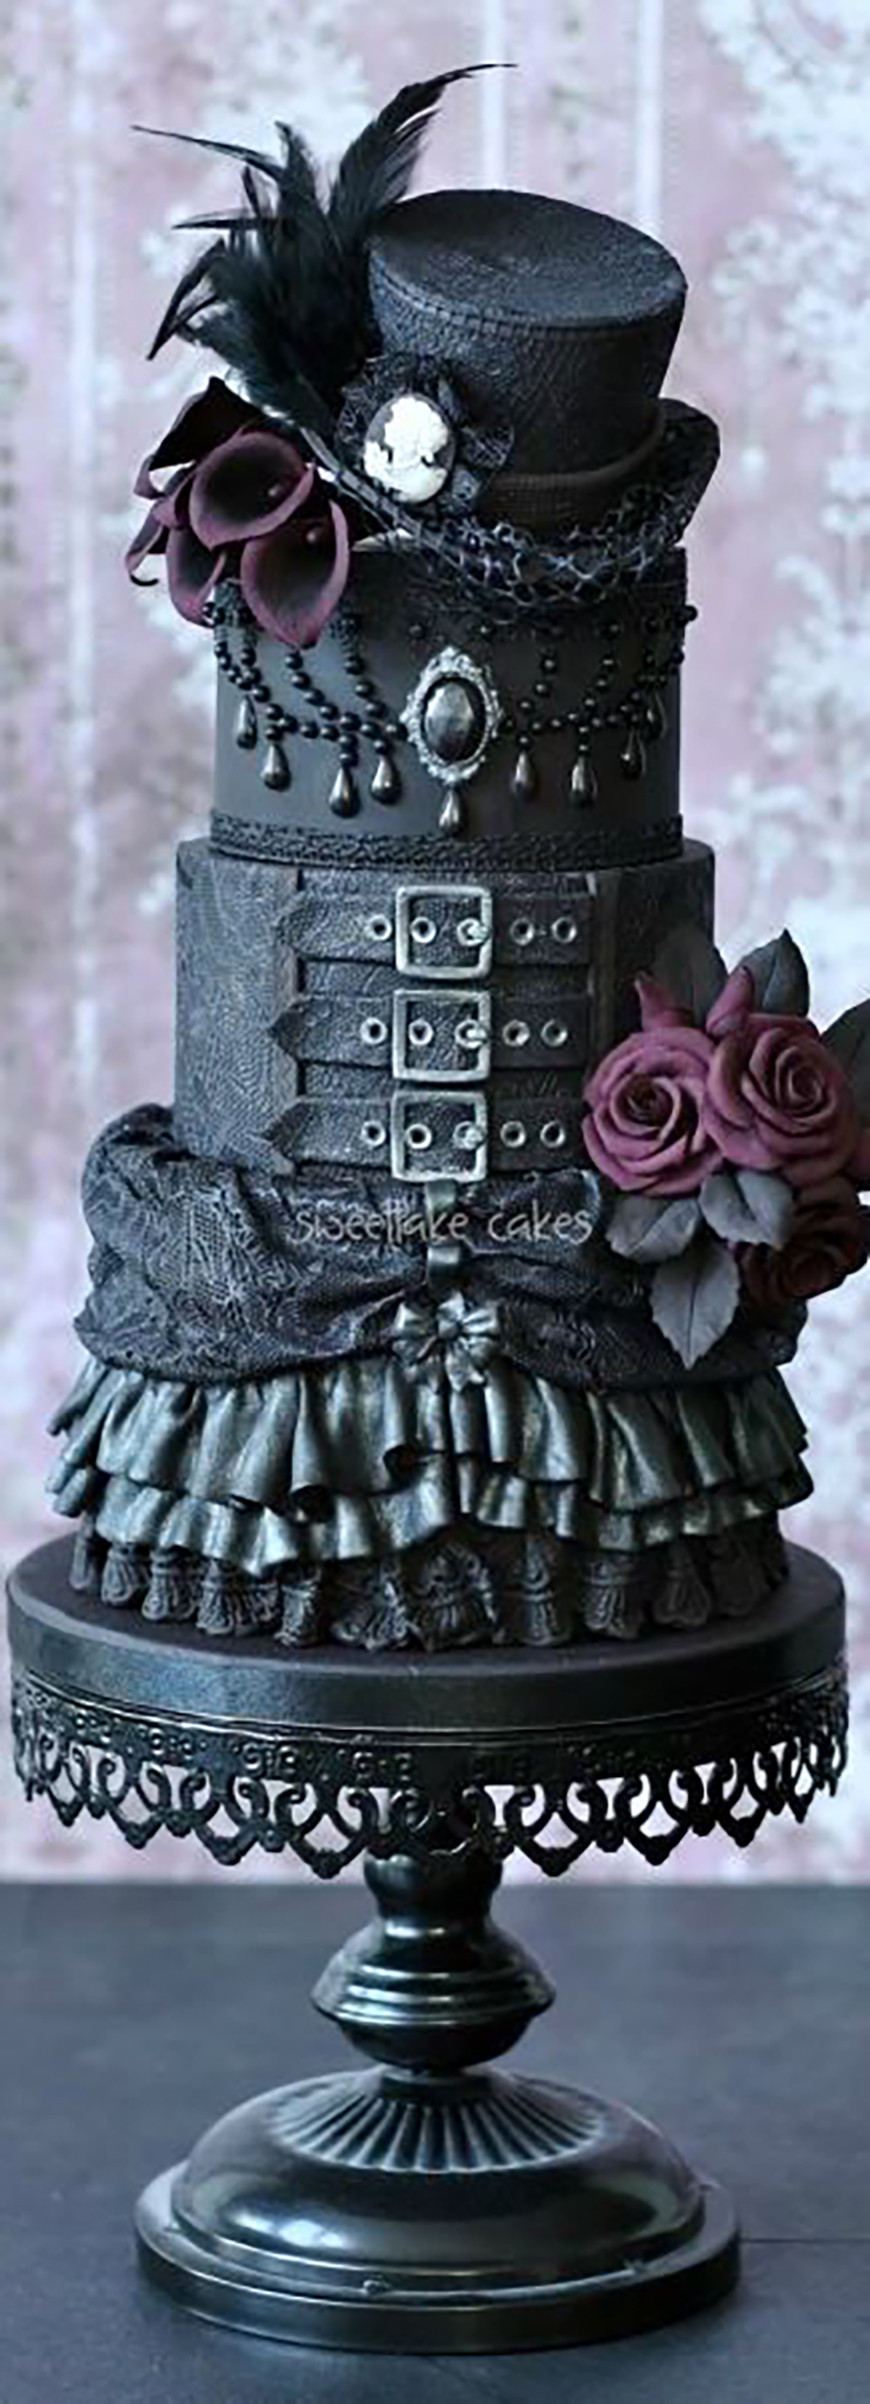 Gothic Wedding Cakes
 23 Halloween Wedding Cakes